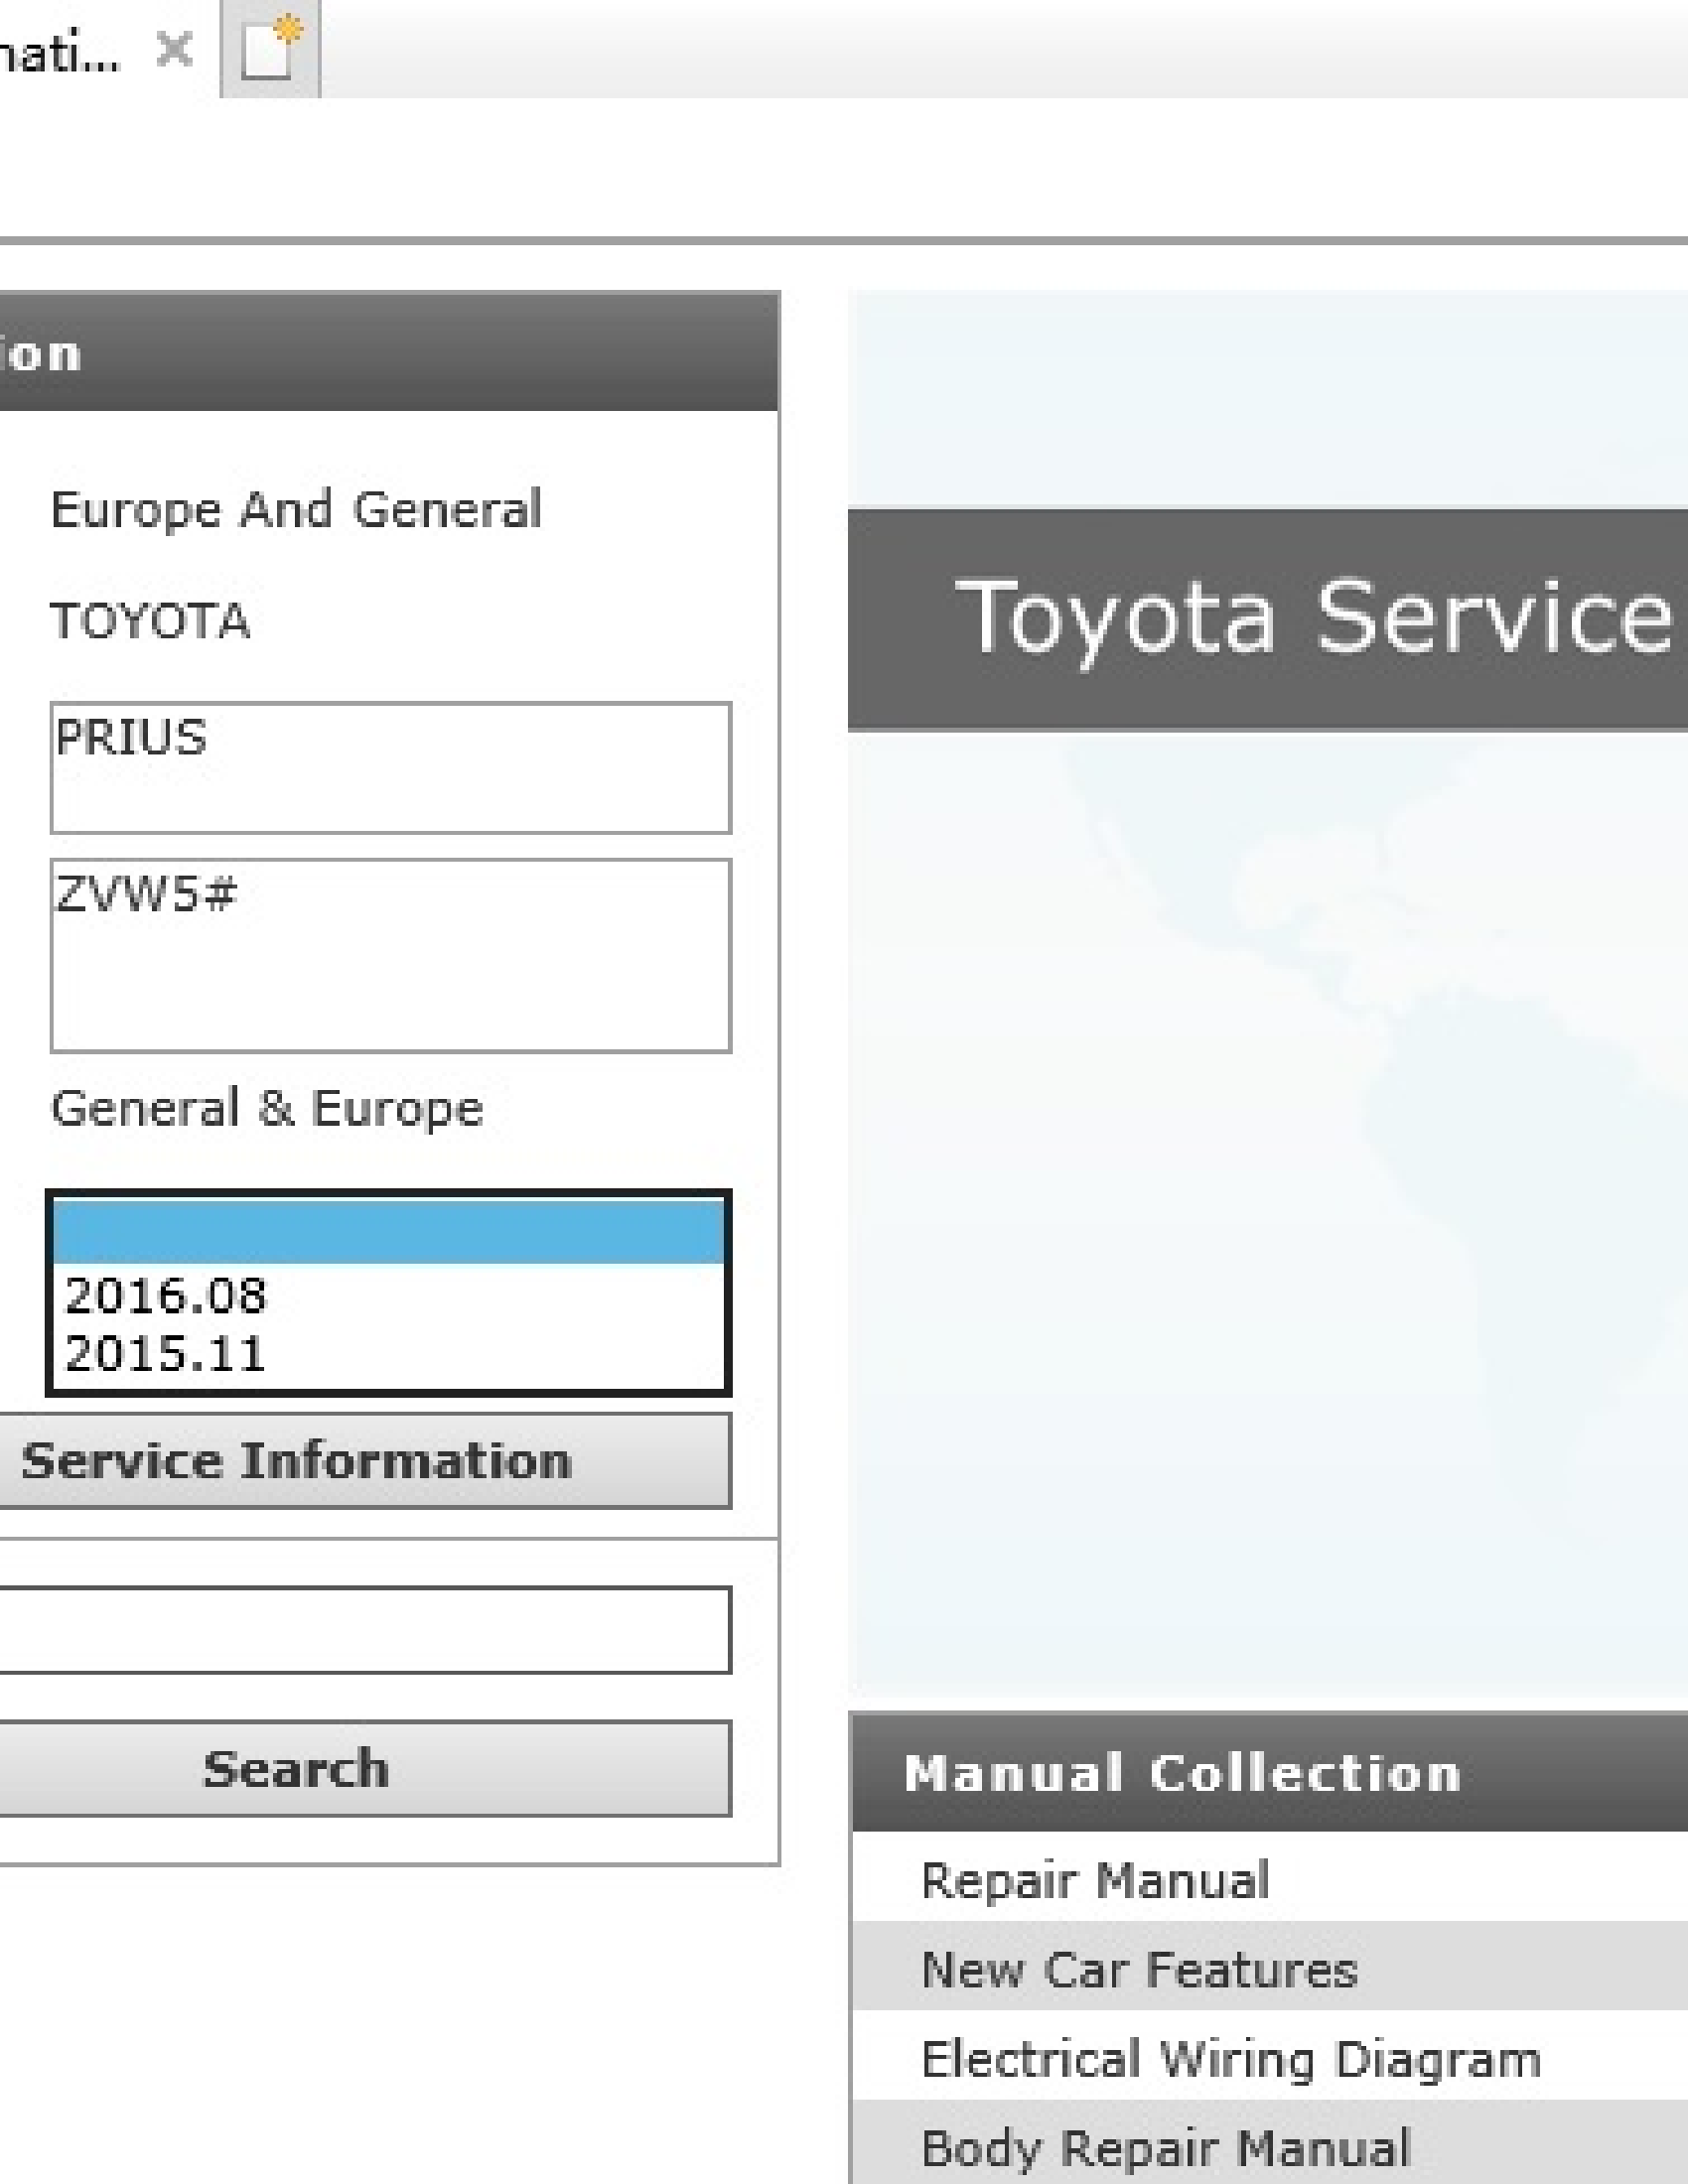 Toyota (ZVW5#) PRIUS manual